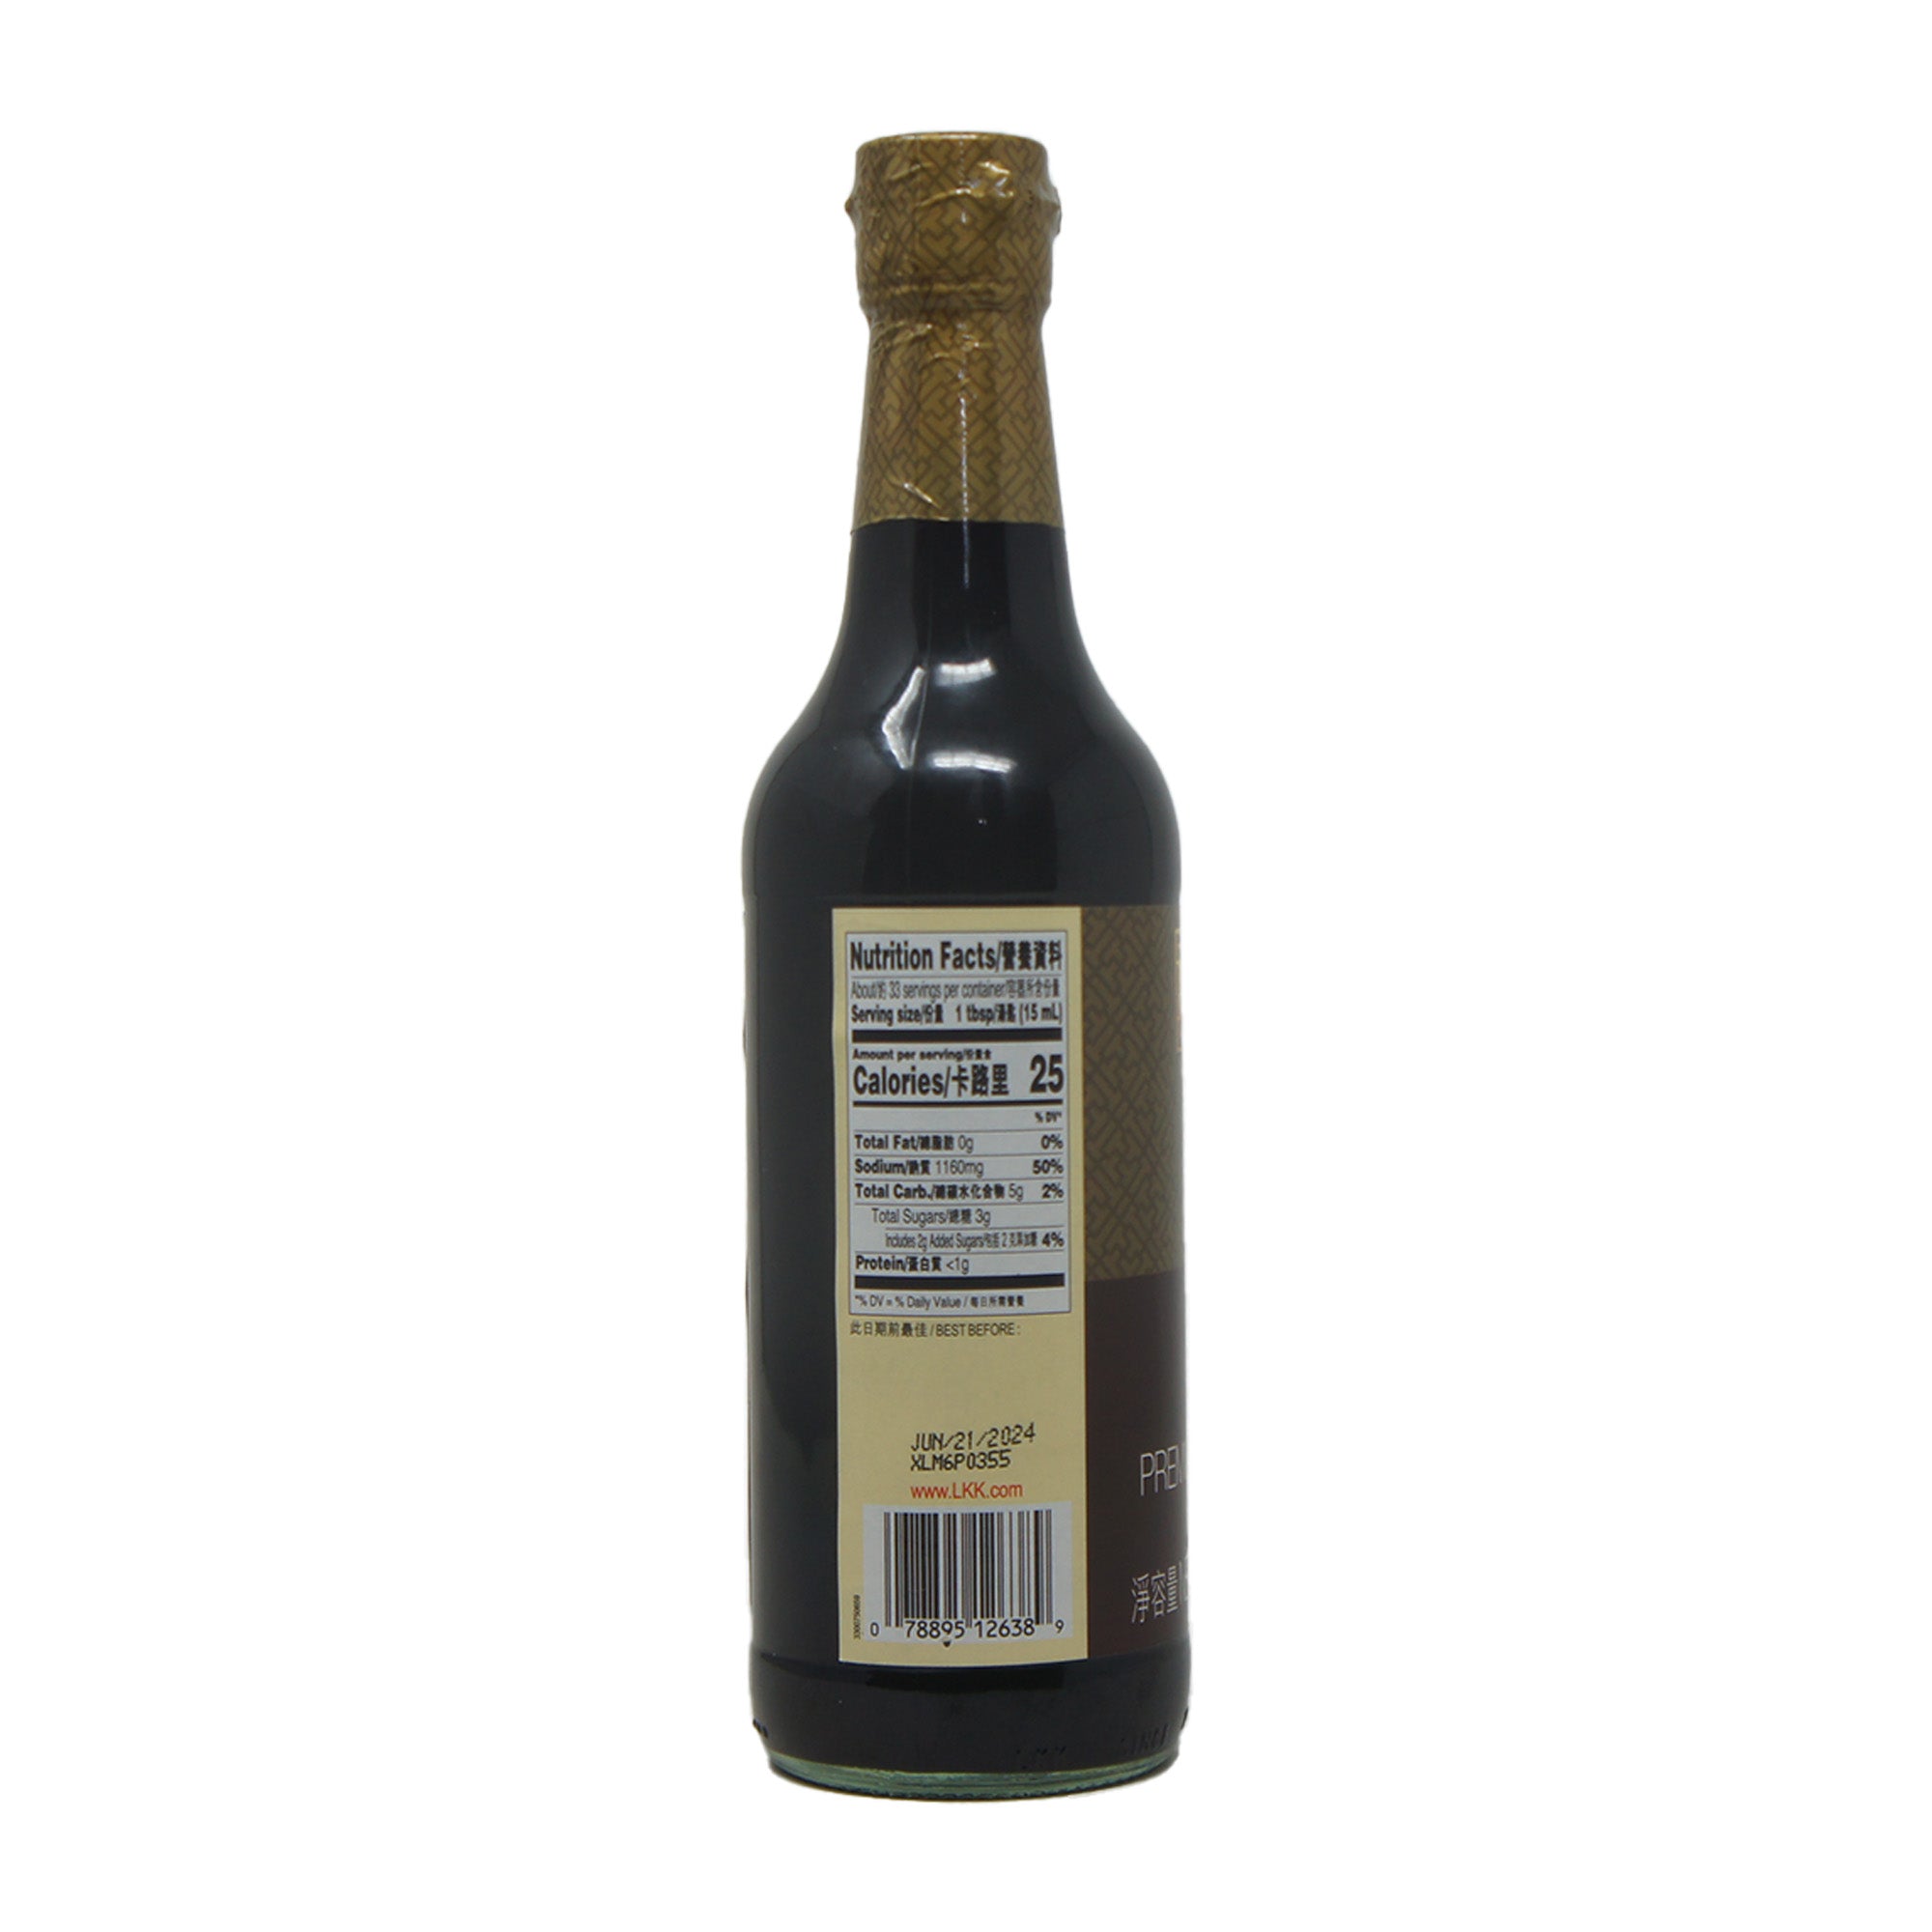 Lee Kum Kee Premium Dark Soy Sauce, 16.9 fl oz Bottle, Product of China